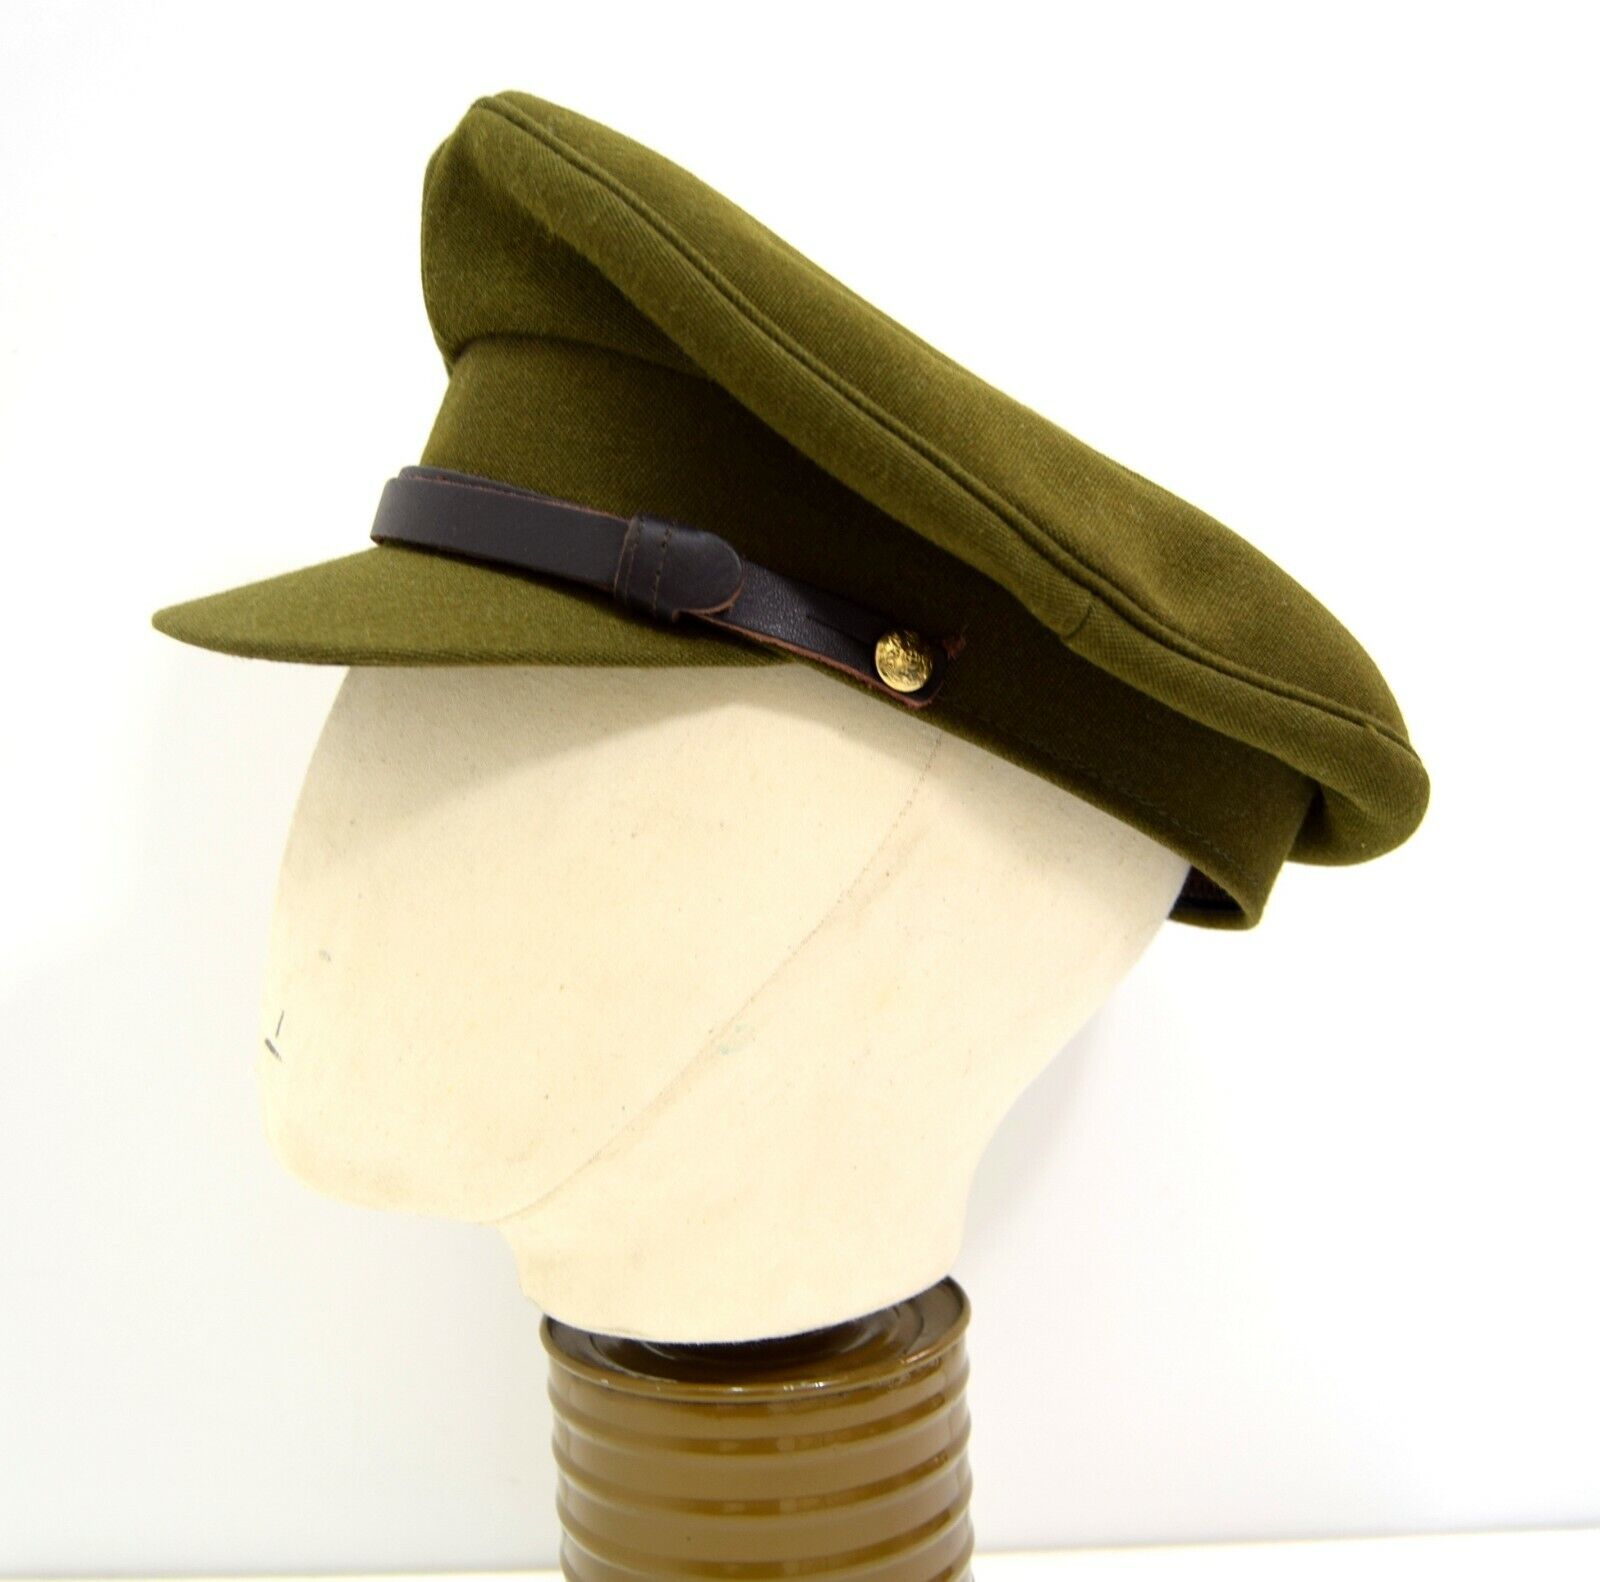 British Army 1940's Khaki Peak Cap WWII Officers No2 Dress Uniform Hat WW2 Issue